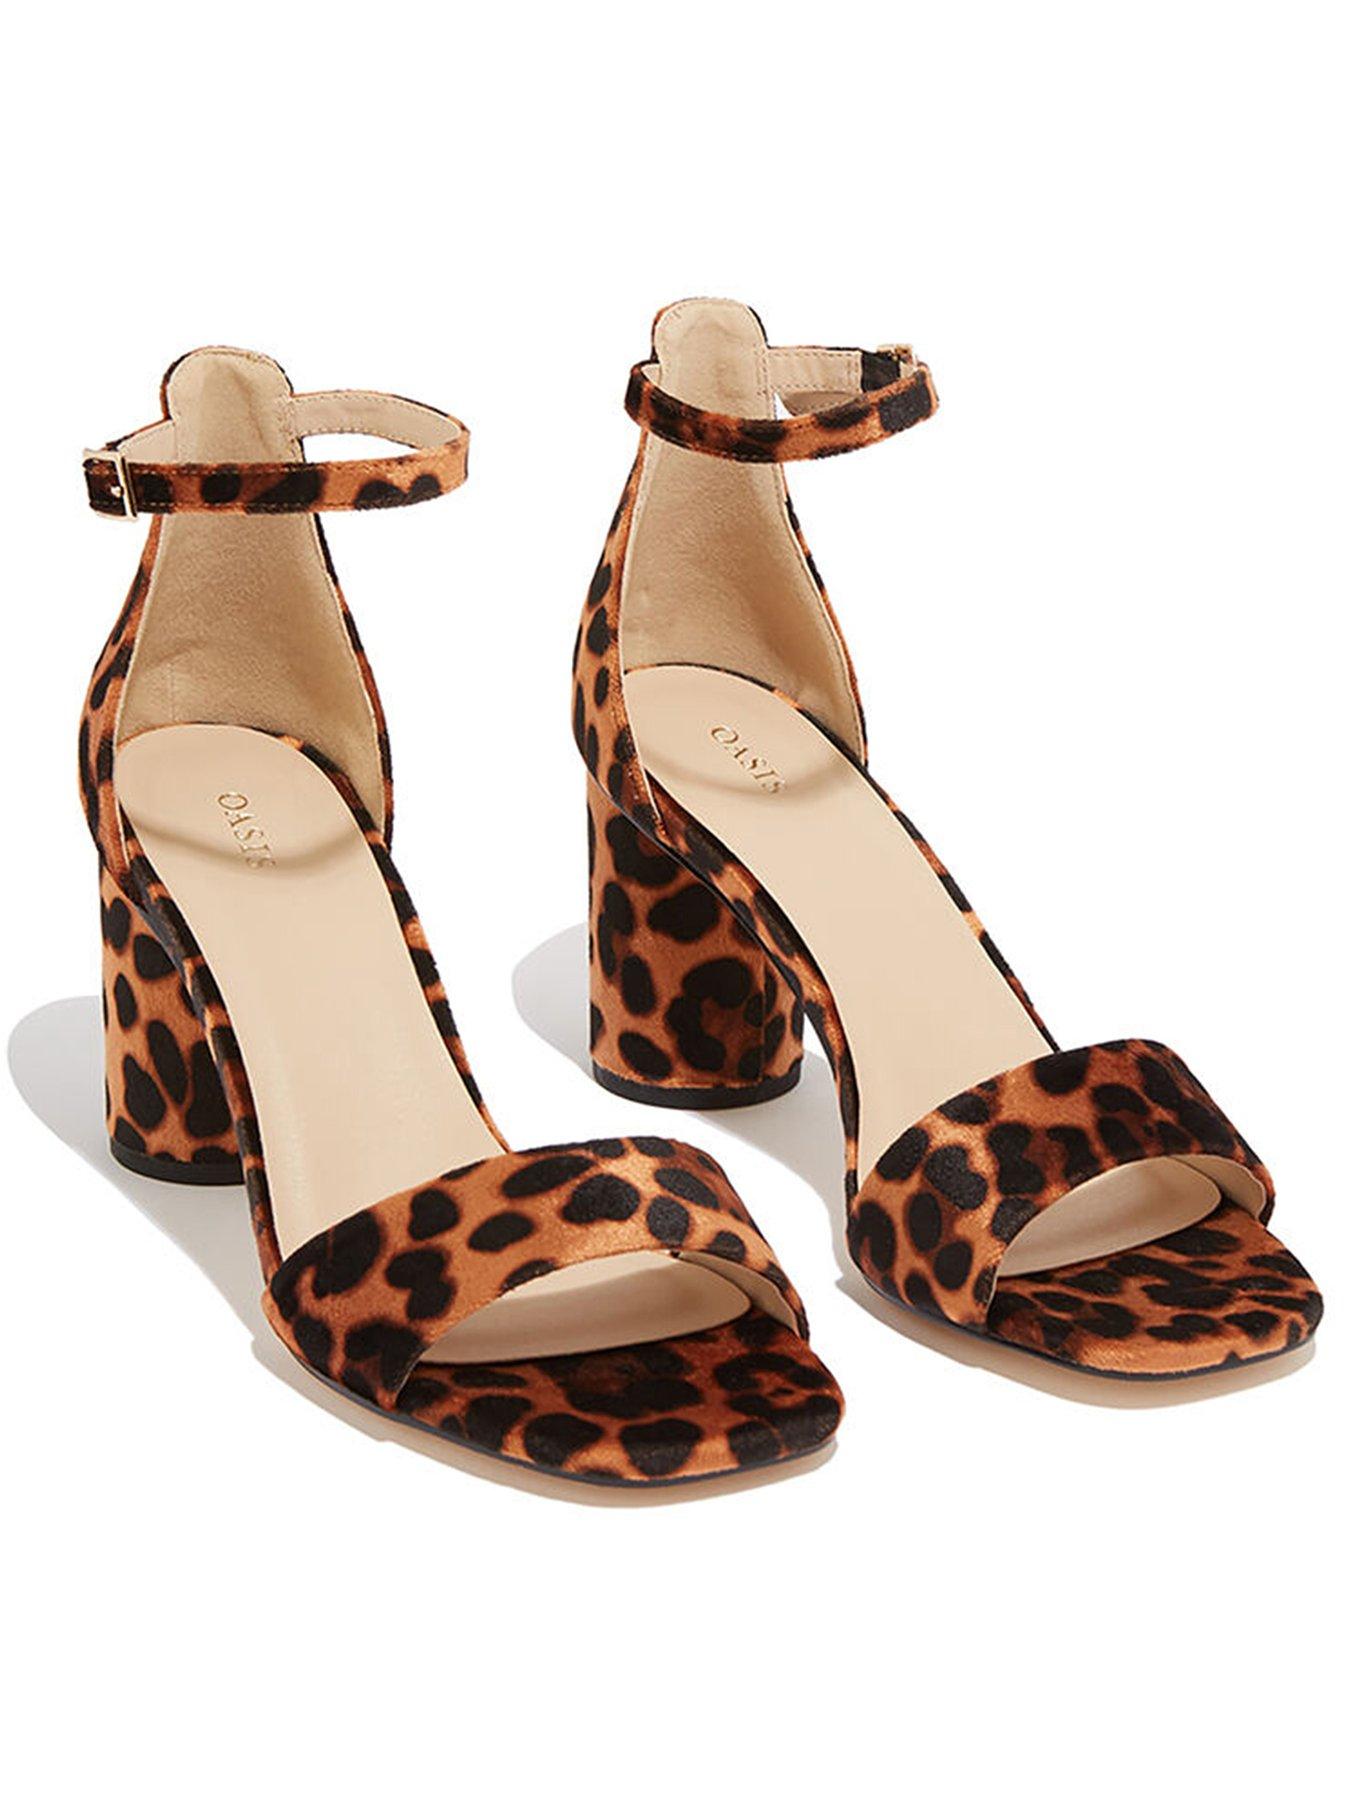 leopard print sandals uk